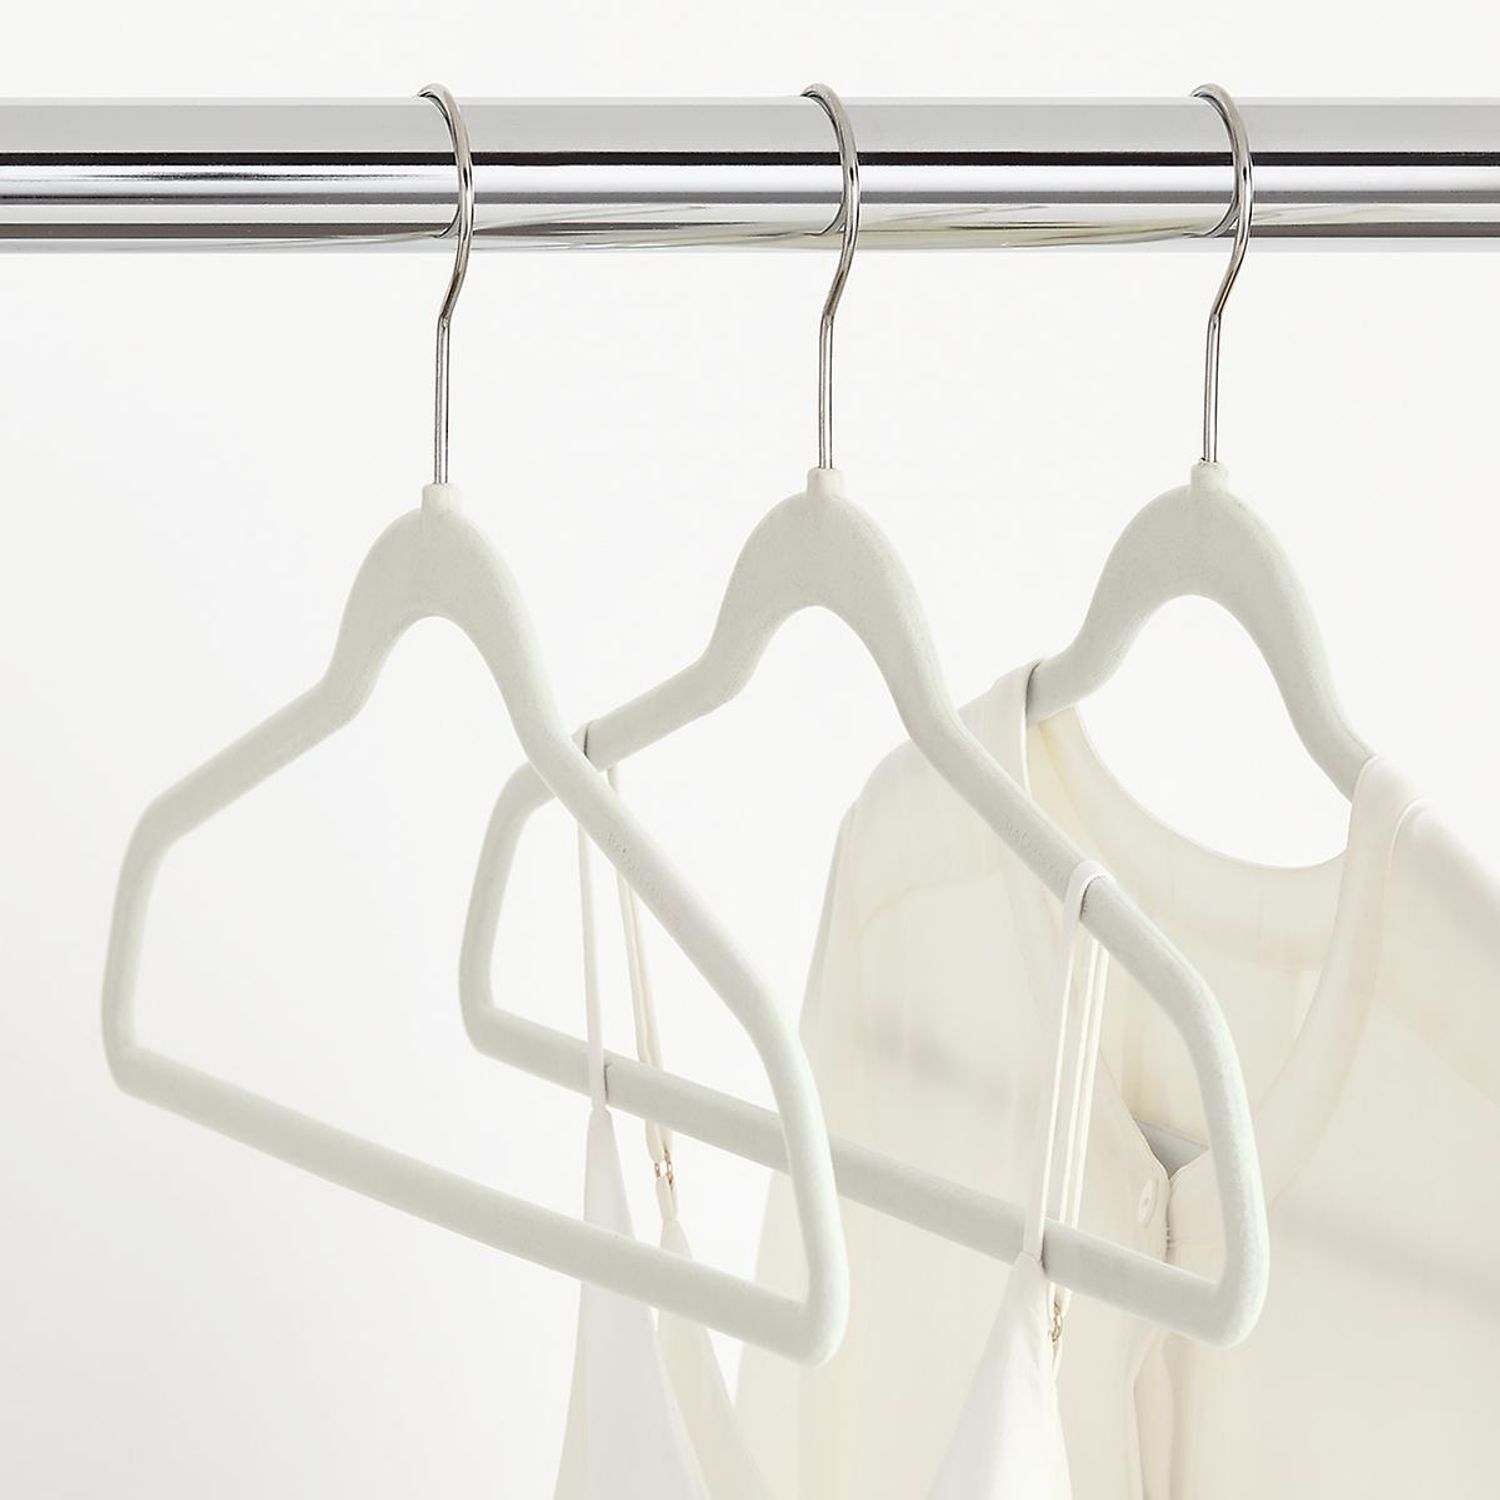 Shop Linen Premium Non-Slip Velvet Suit Hangers from The Container Store on Openhaus